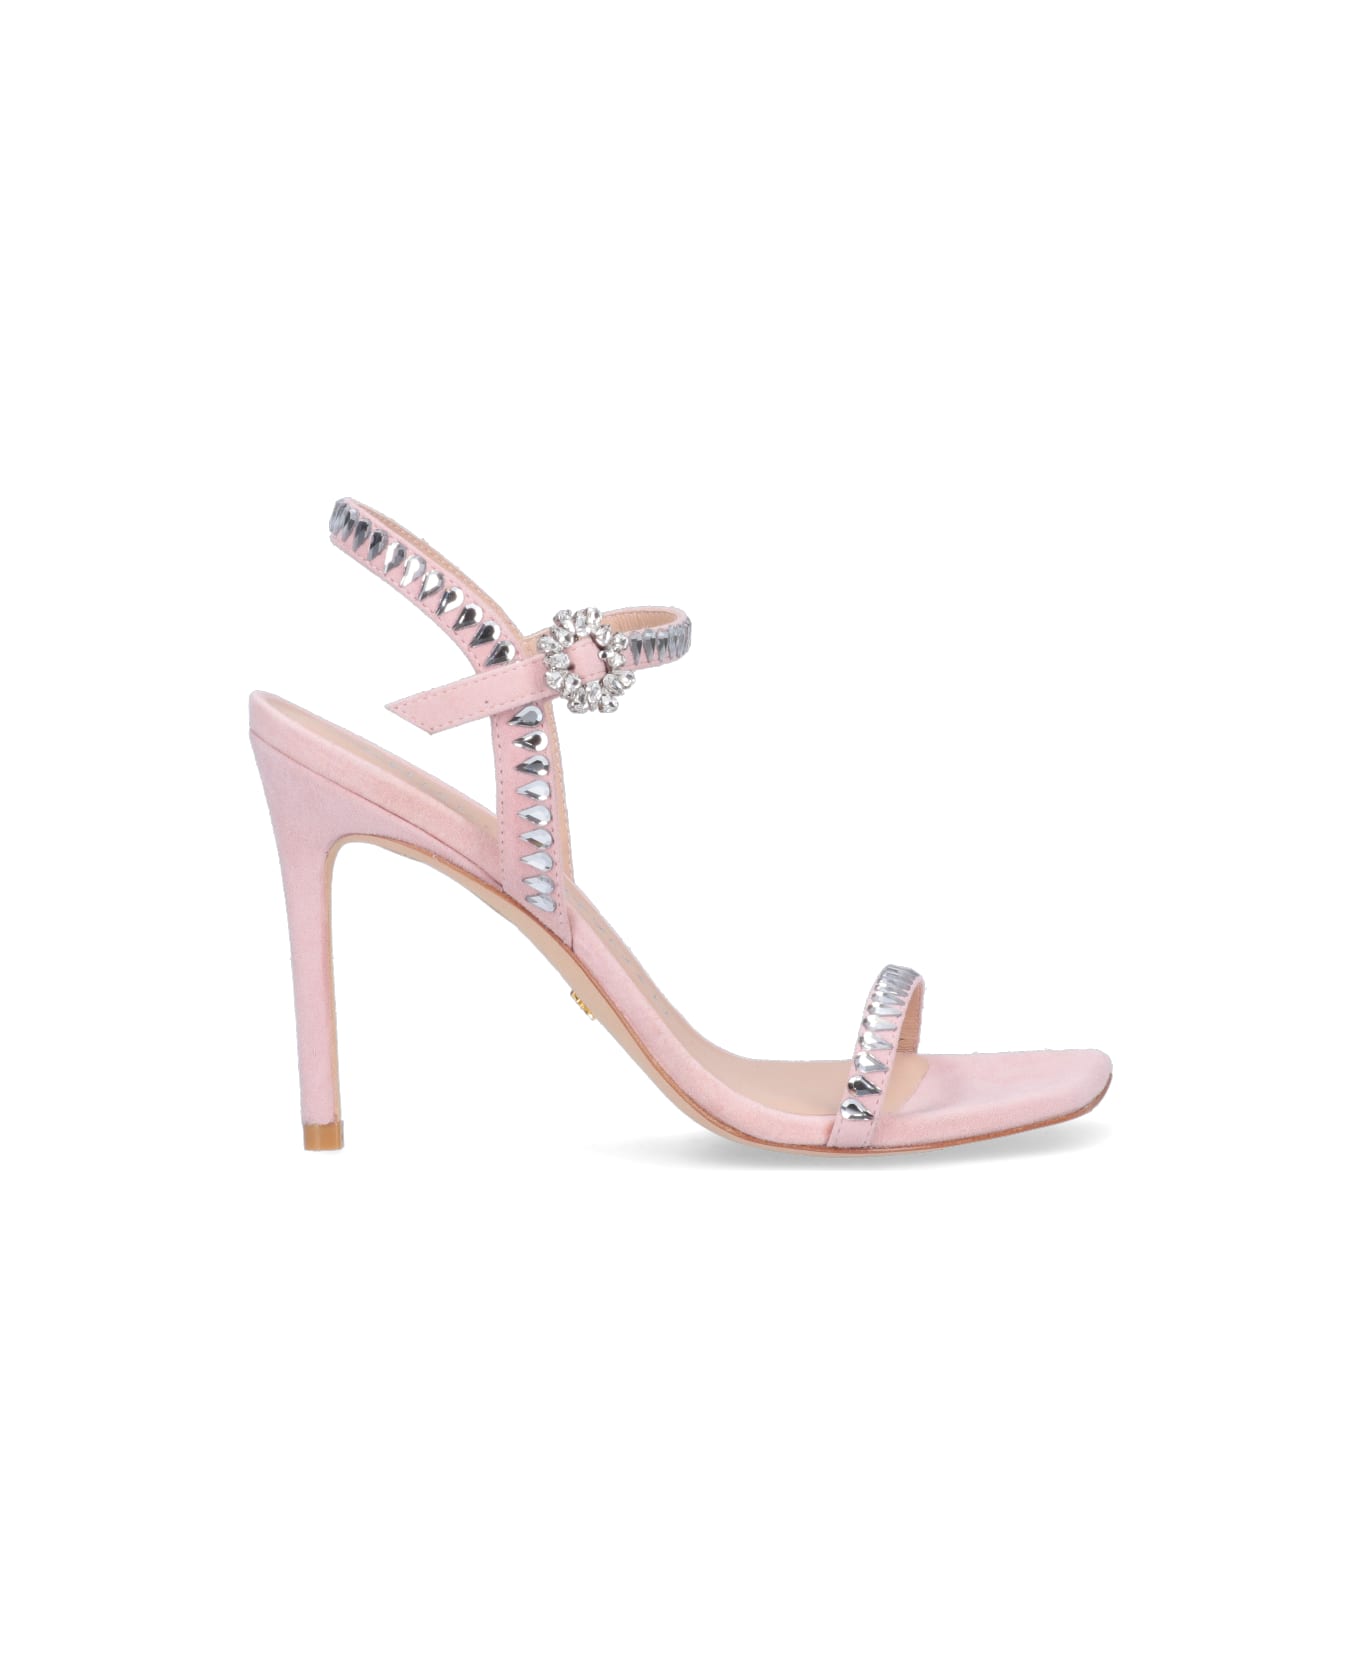 Stuart Weitzman 'gemcut' Sandals - Pink サンダル